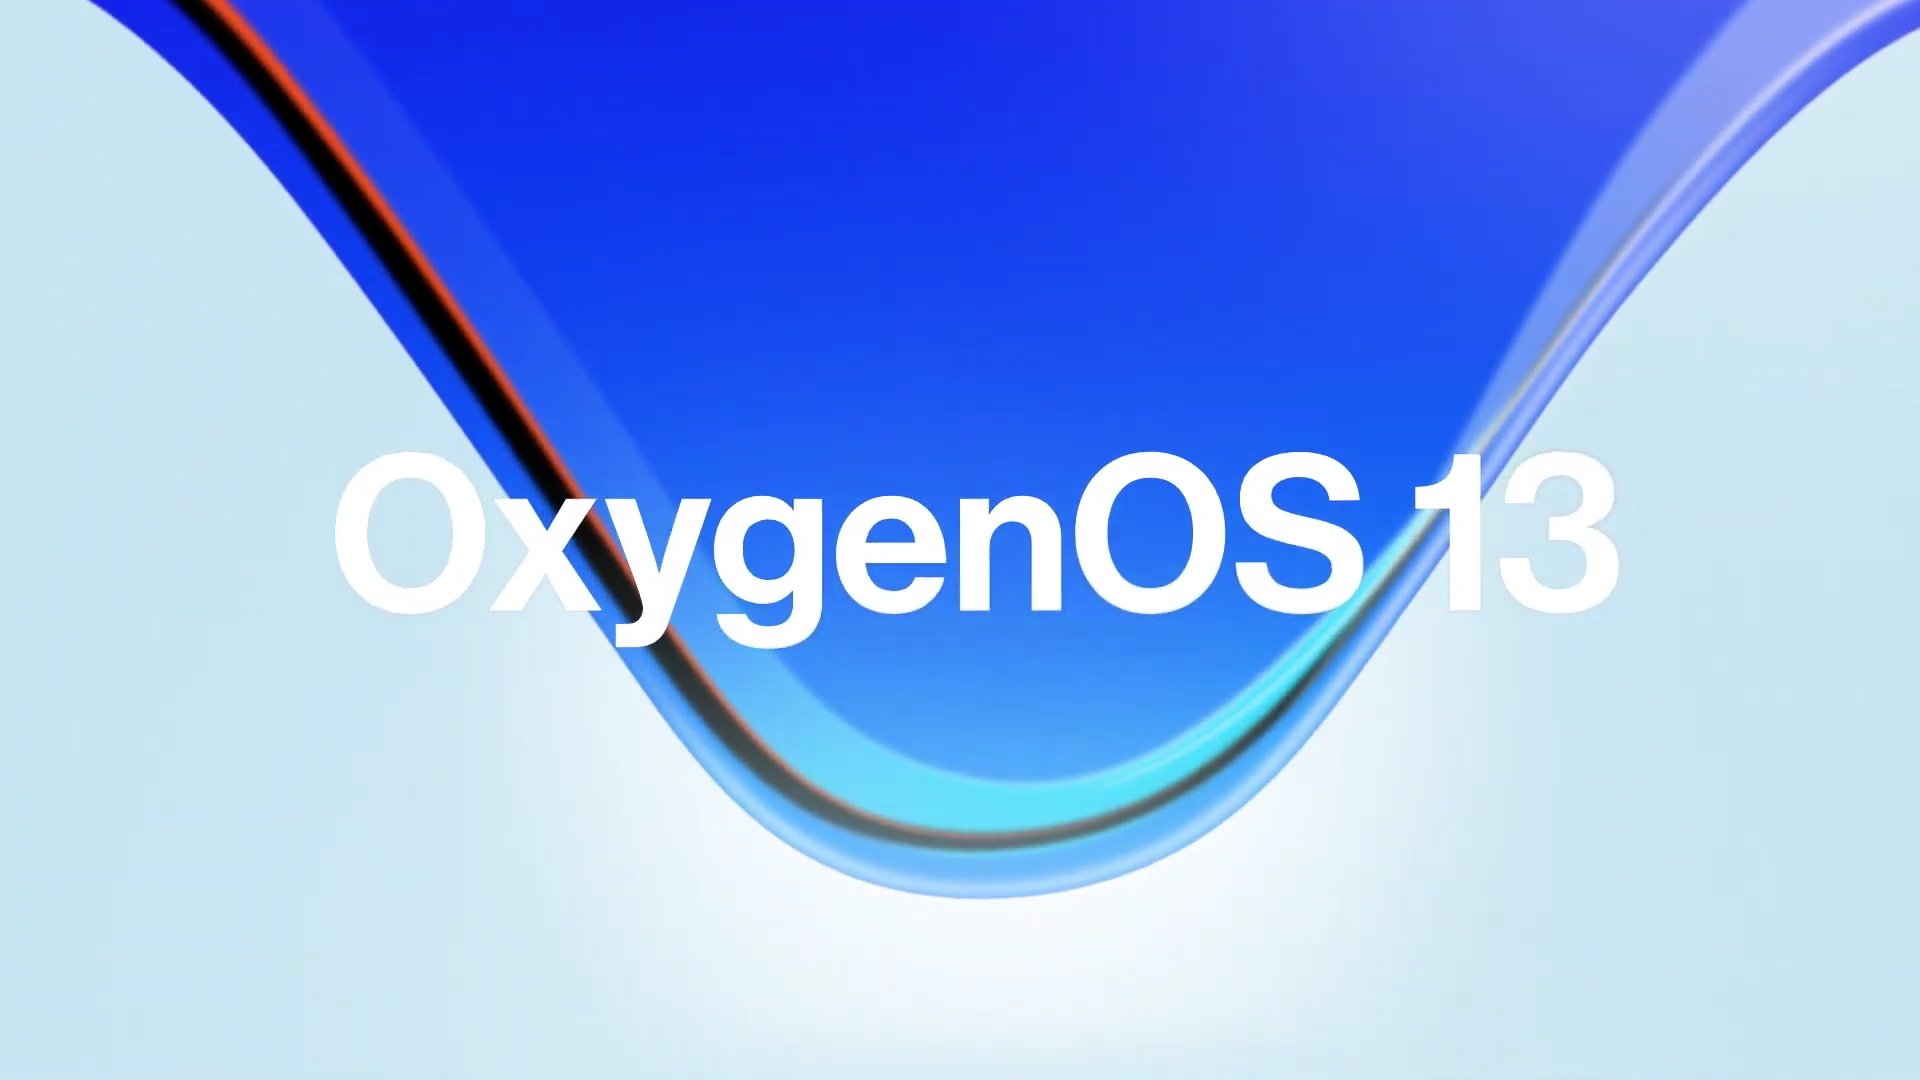 Oxygen OS 13 Downloads